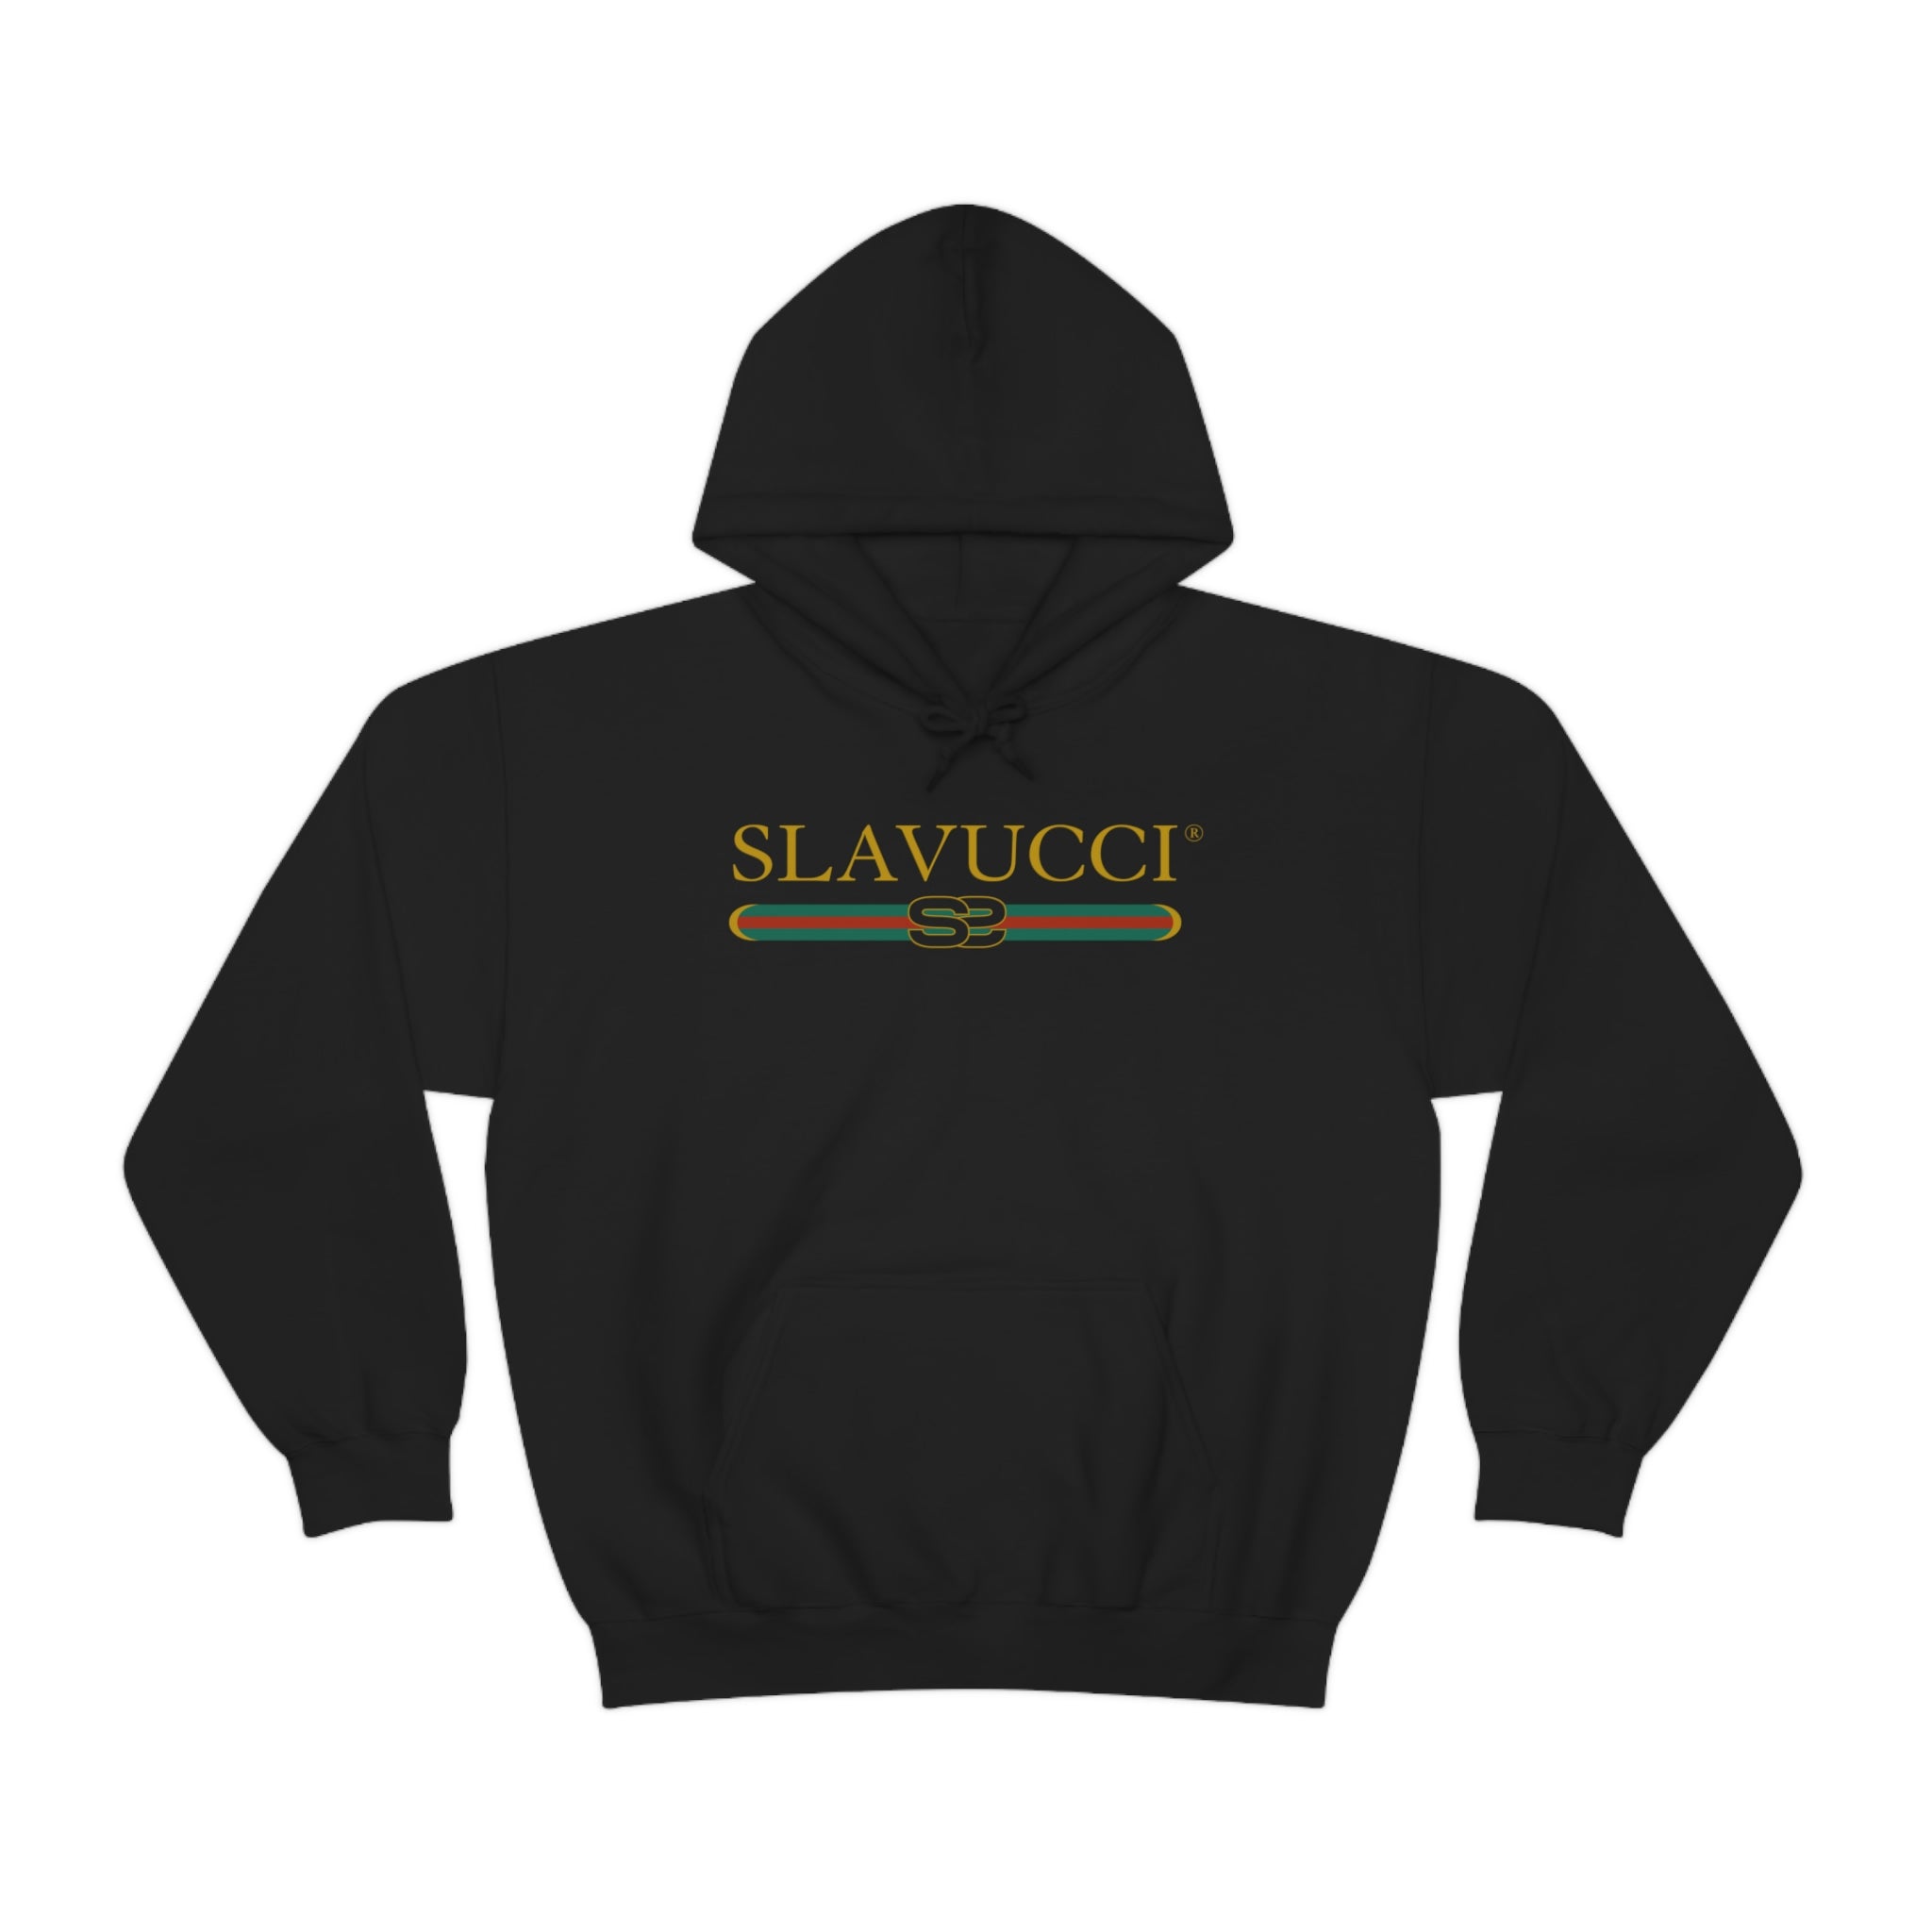 Slavucci Sensation - Hooded Sweatshirt